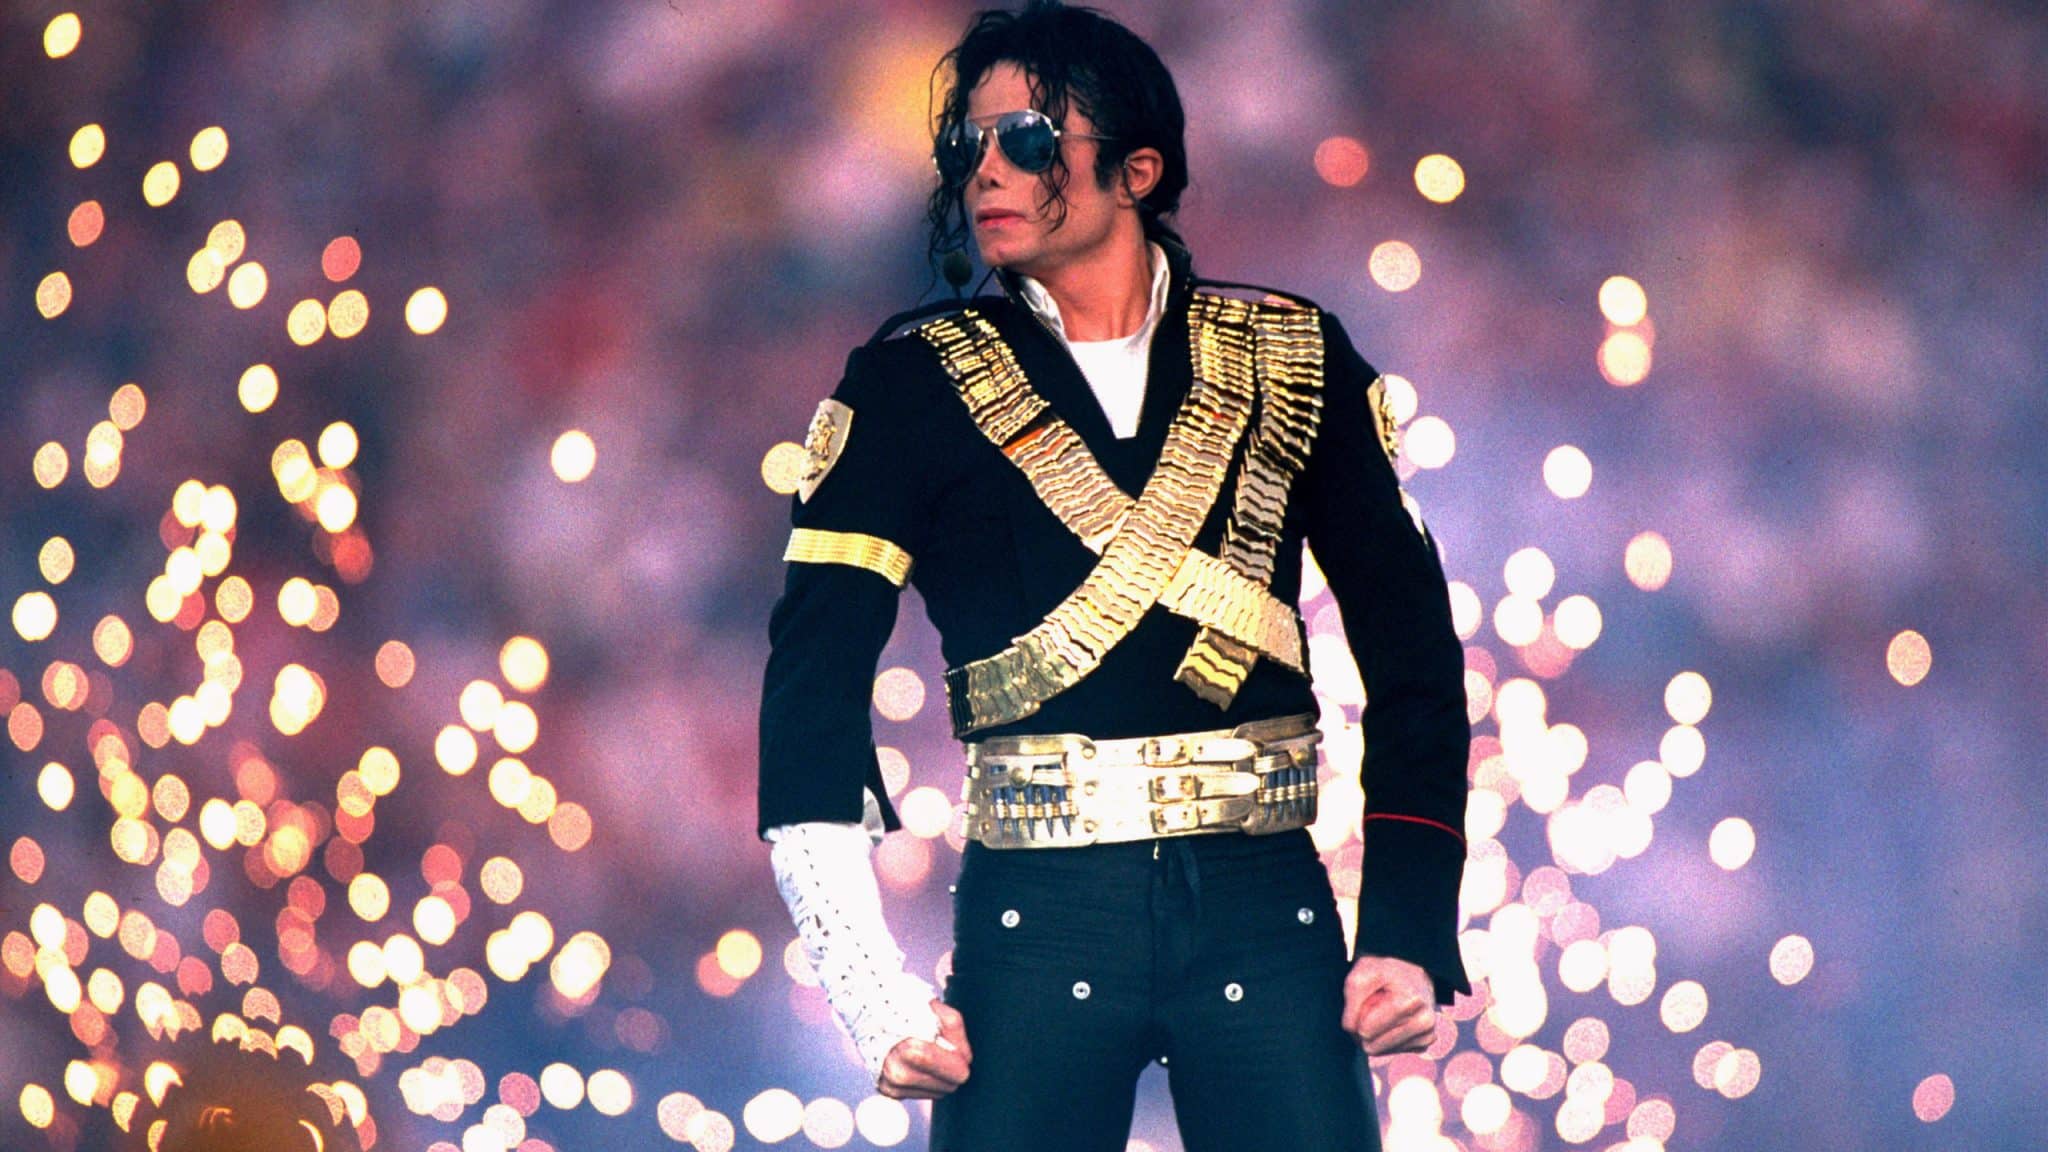 Michael Jackson Birthday